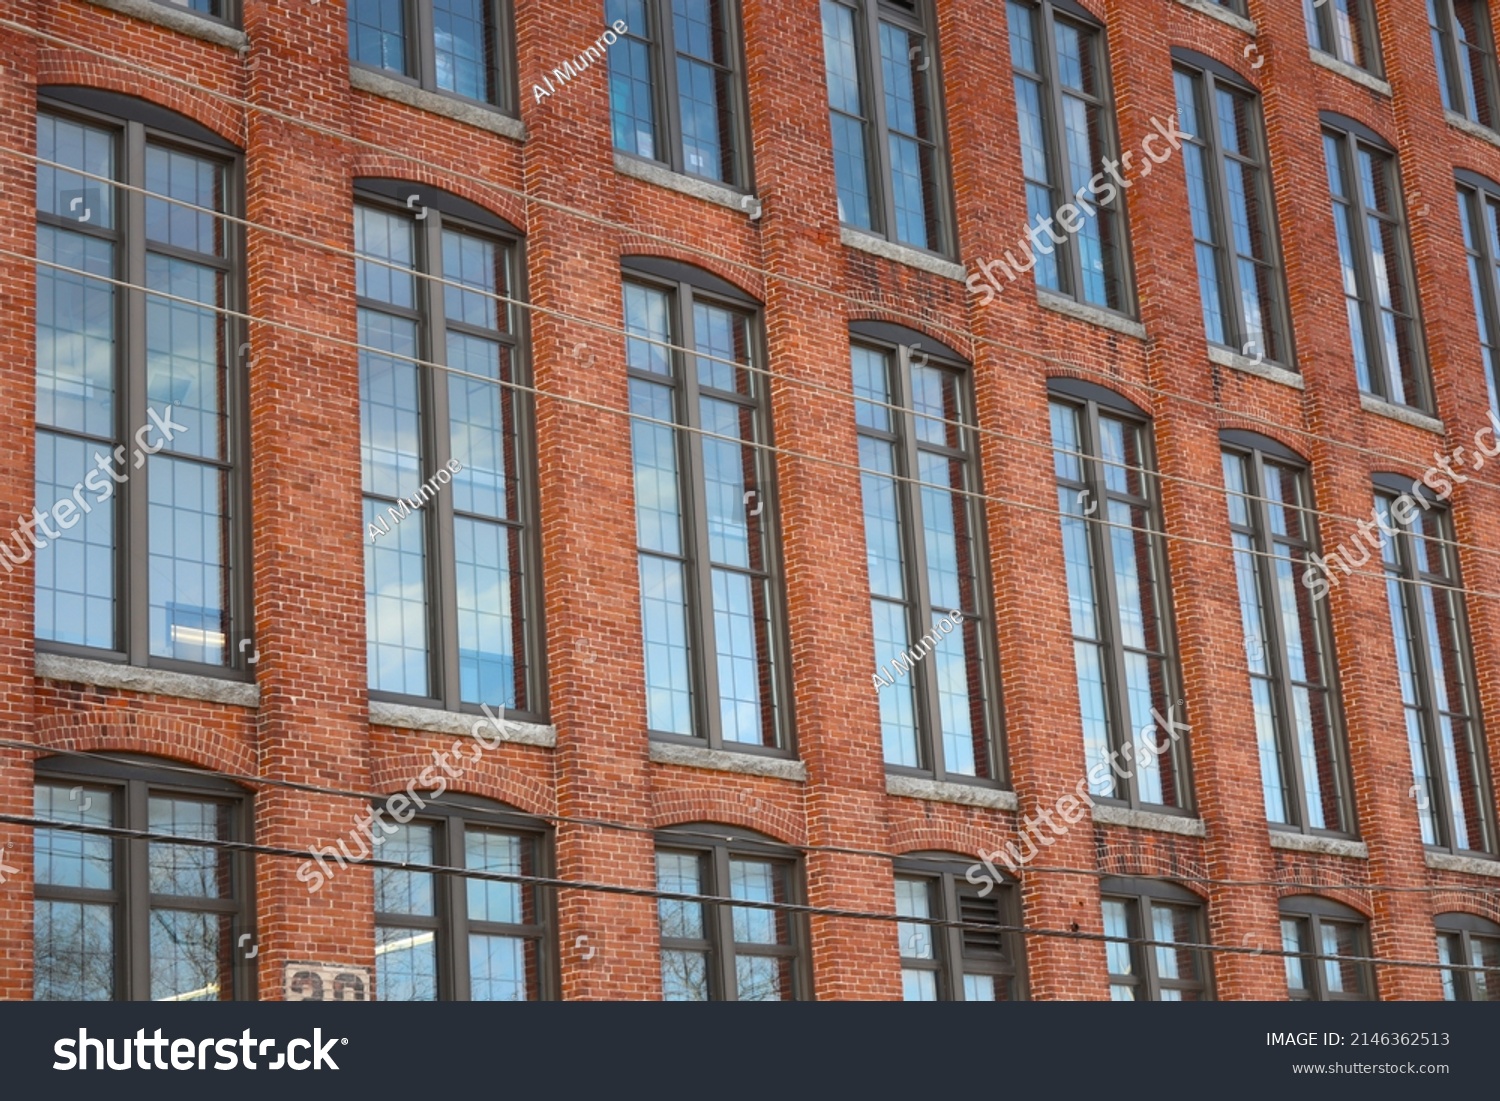 Beautiful Tall Windows spread across Old New England Mill Building: Clinton, Massachusetts #2146362513